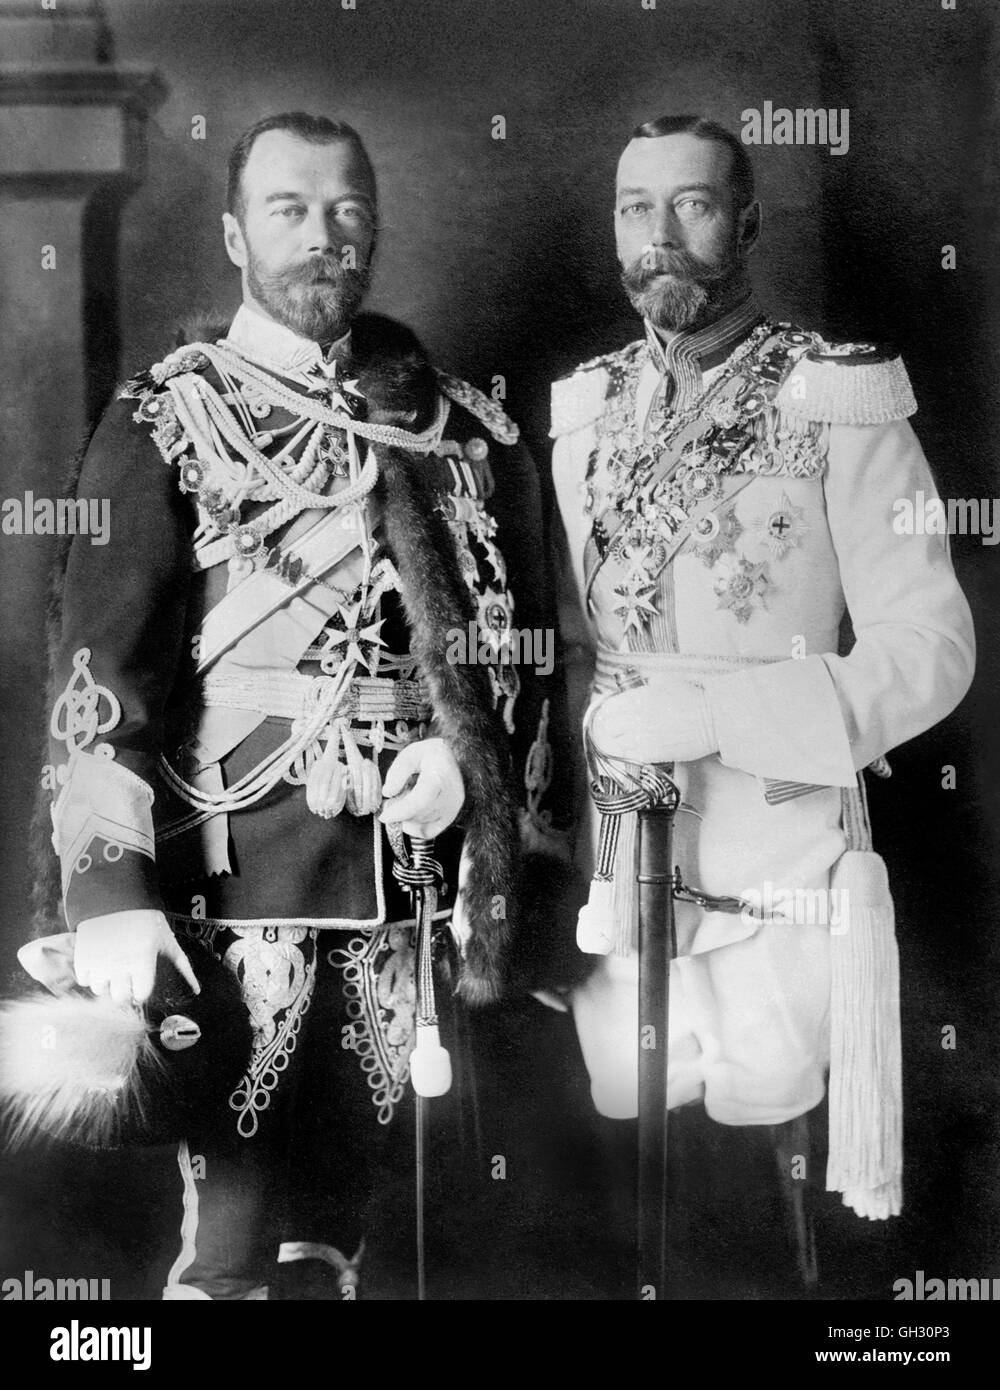 George V and Tsar Nicholas II. Portrait of King George V (1865-1936) and Tsar Nicholas II (1868-1918). Photo from Bains News Service, c.1913. Stock Photo